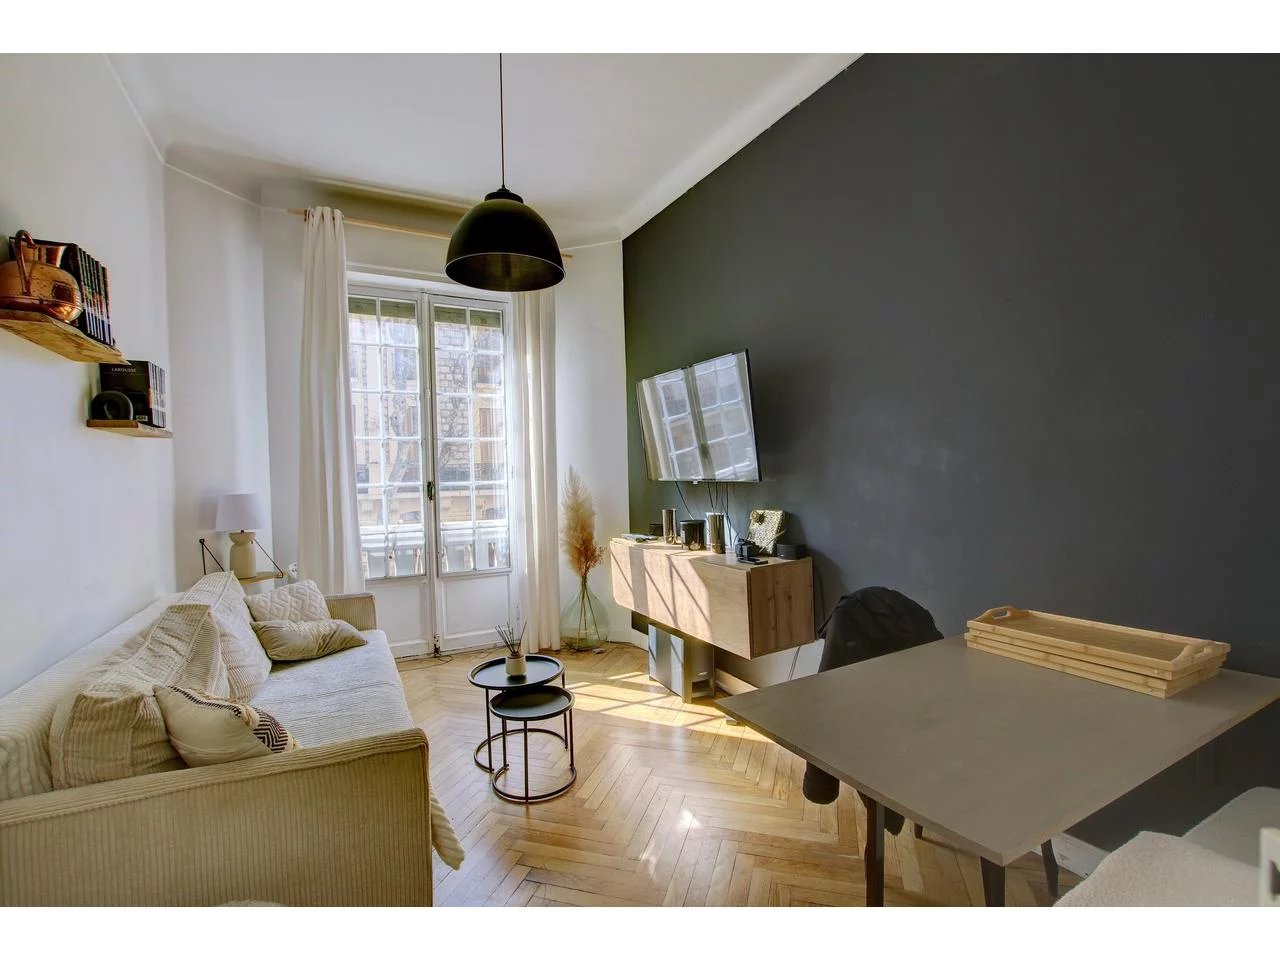 Appartement  2 Locali 35m2  In vendita   220 000 €